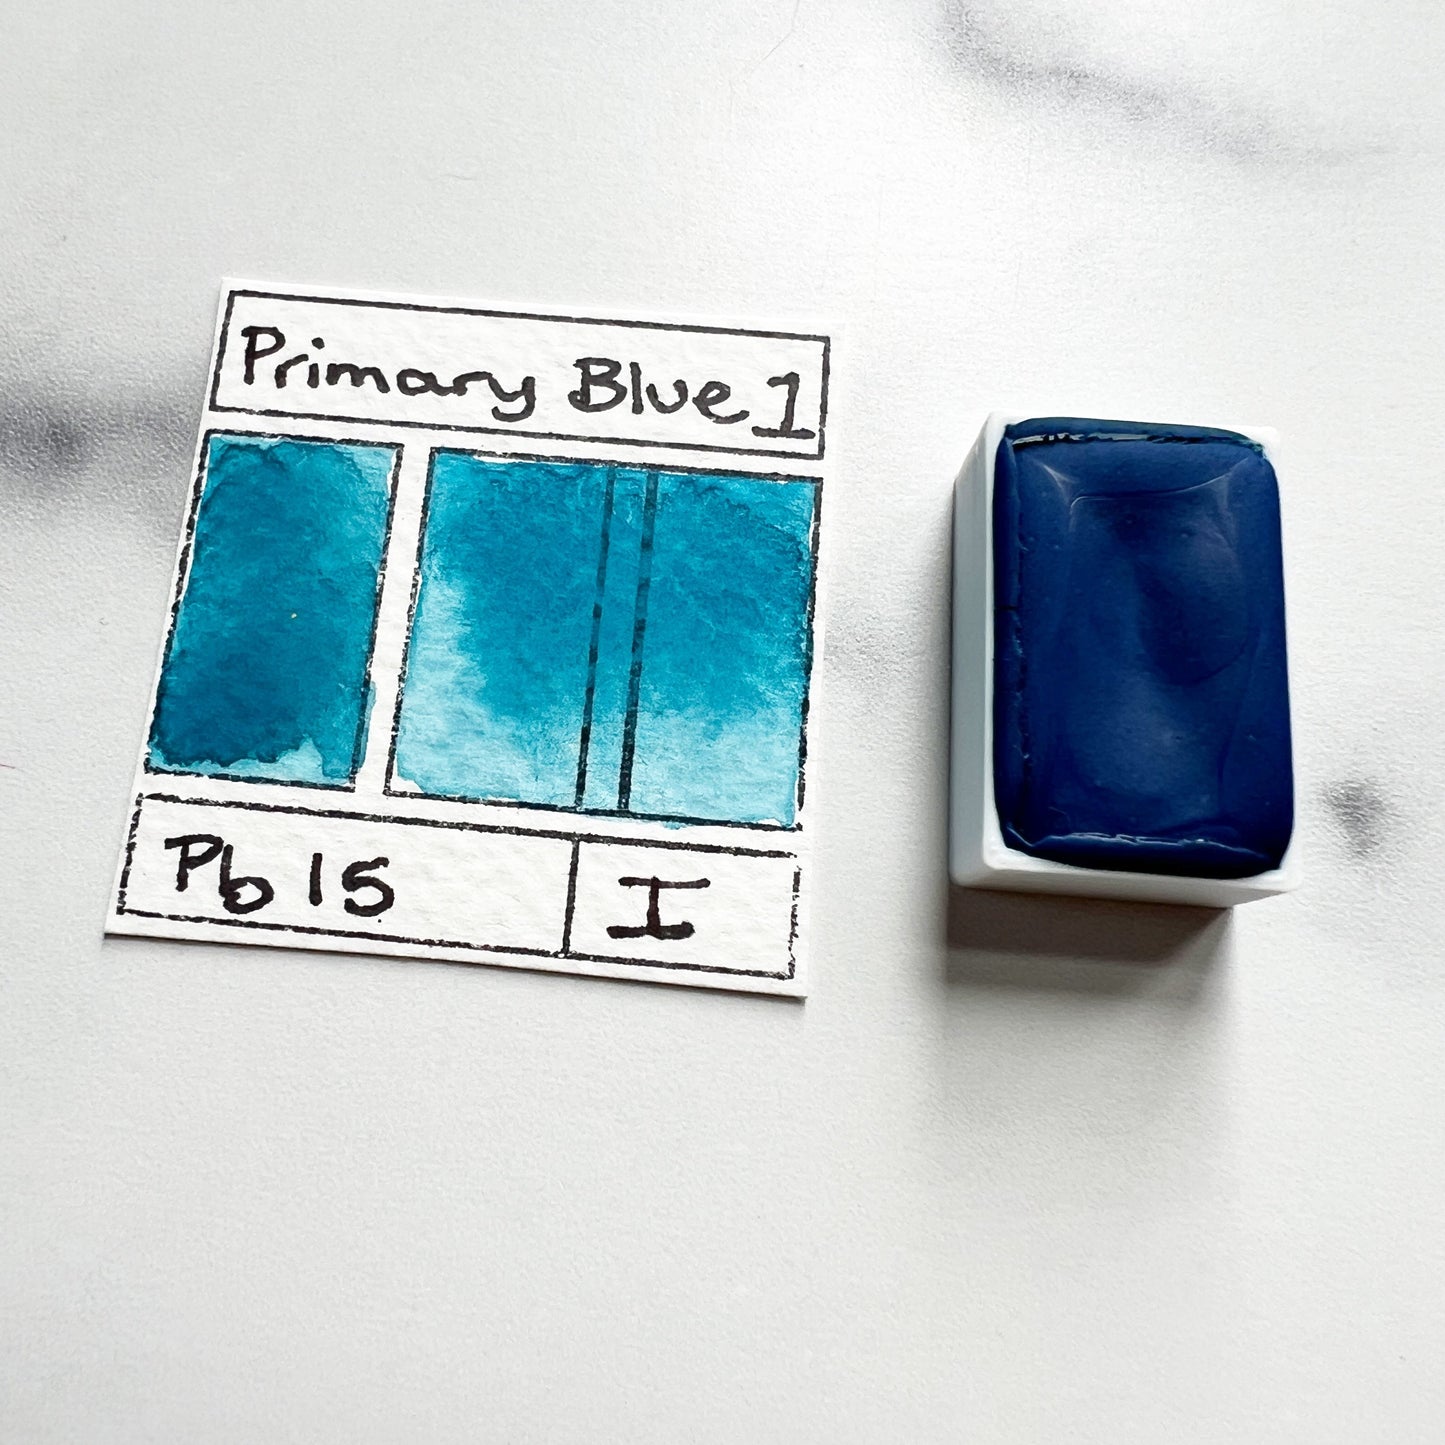 Primary Blue. Half pan or bottle cap of handmade watercolor paint